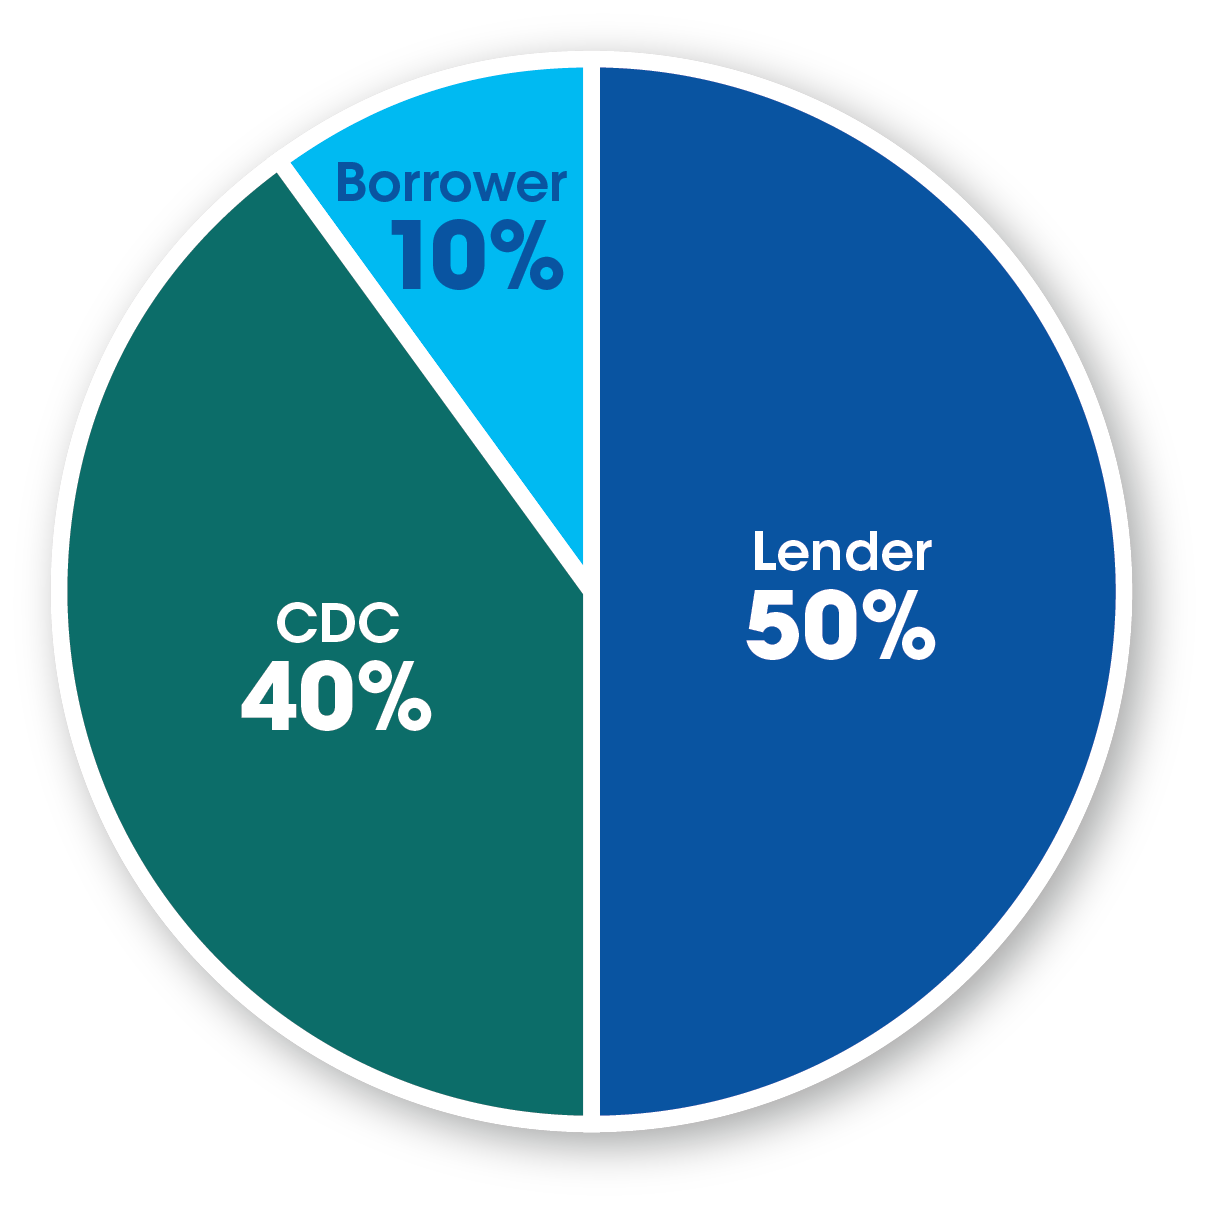 Lender 50%, CDC 40%, Borrower 10%